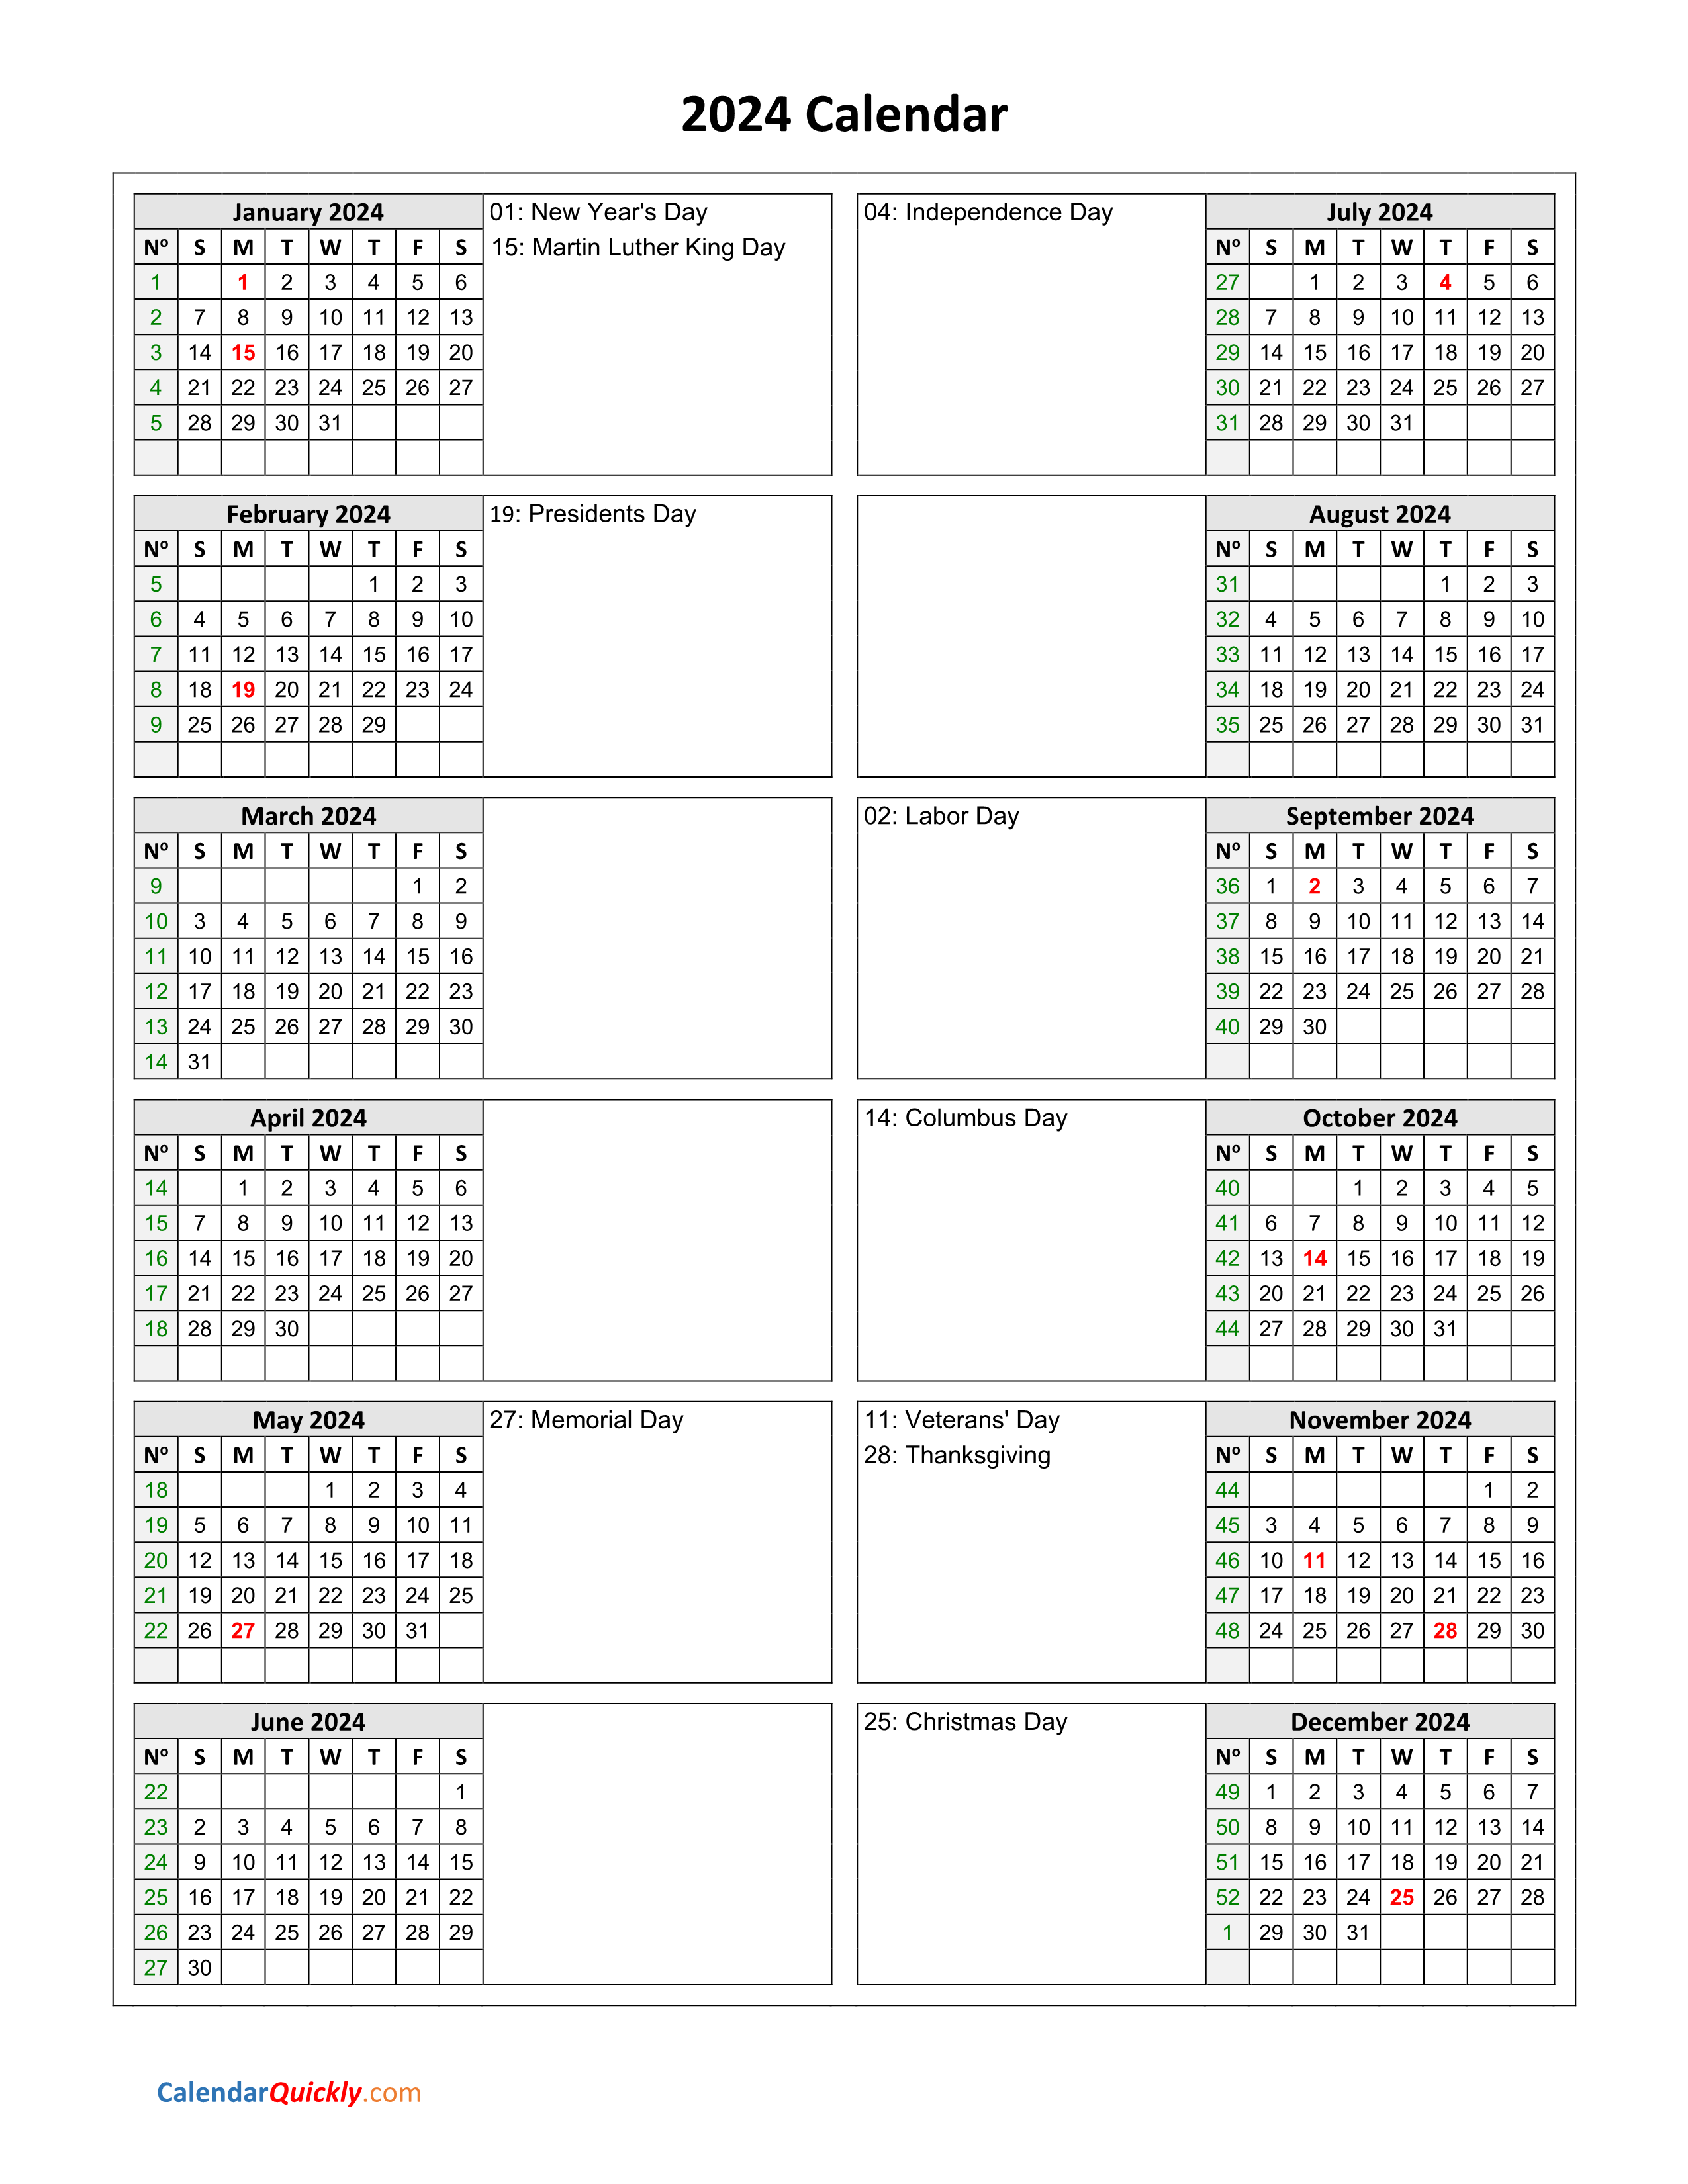 Holidays Calendar 2024 Vertical Calendar Quickly - Free Printable 2024 Yearly Calendar Vertical